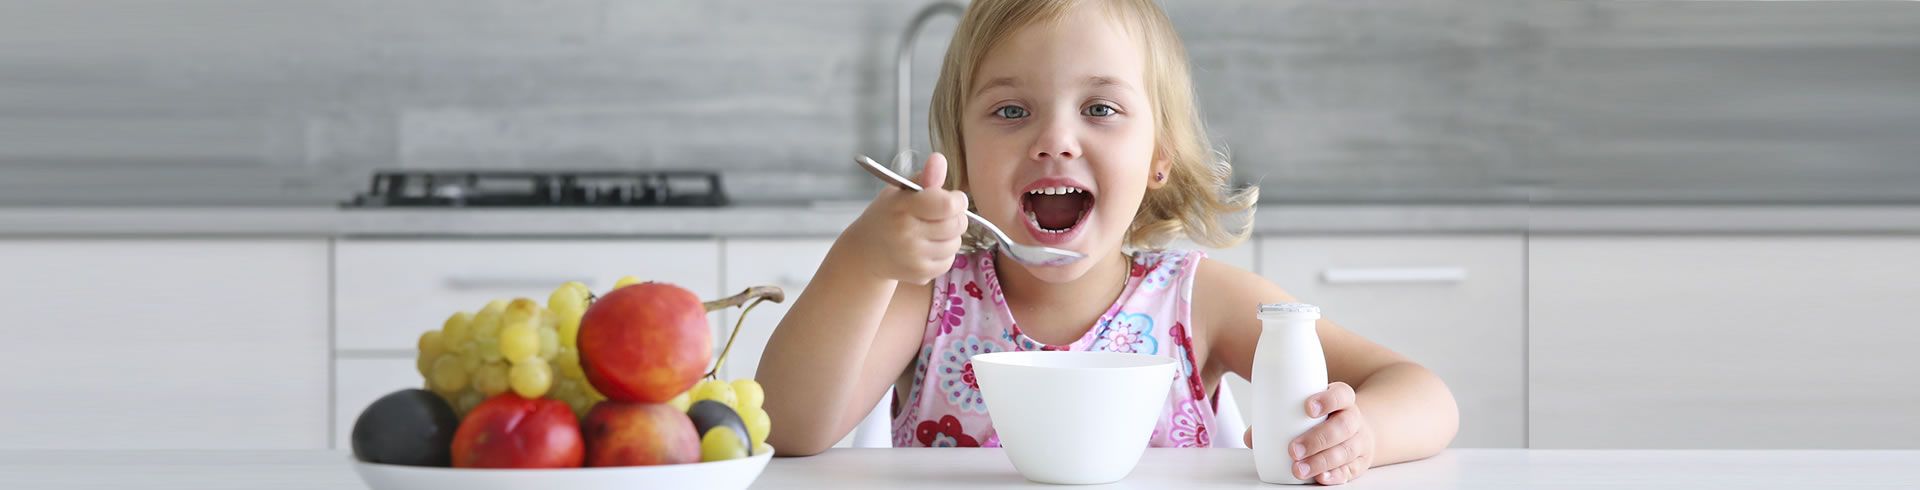 Little girl eating healthy